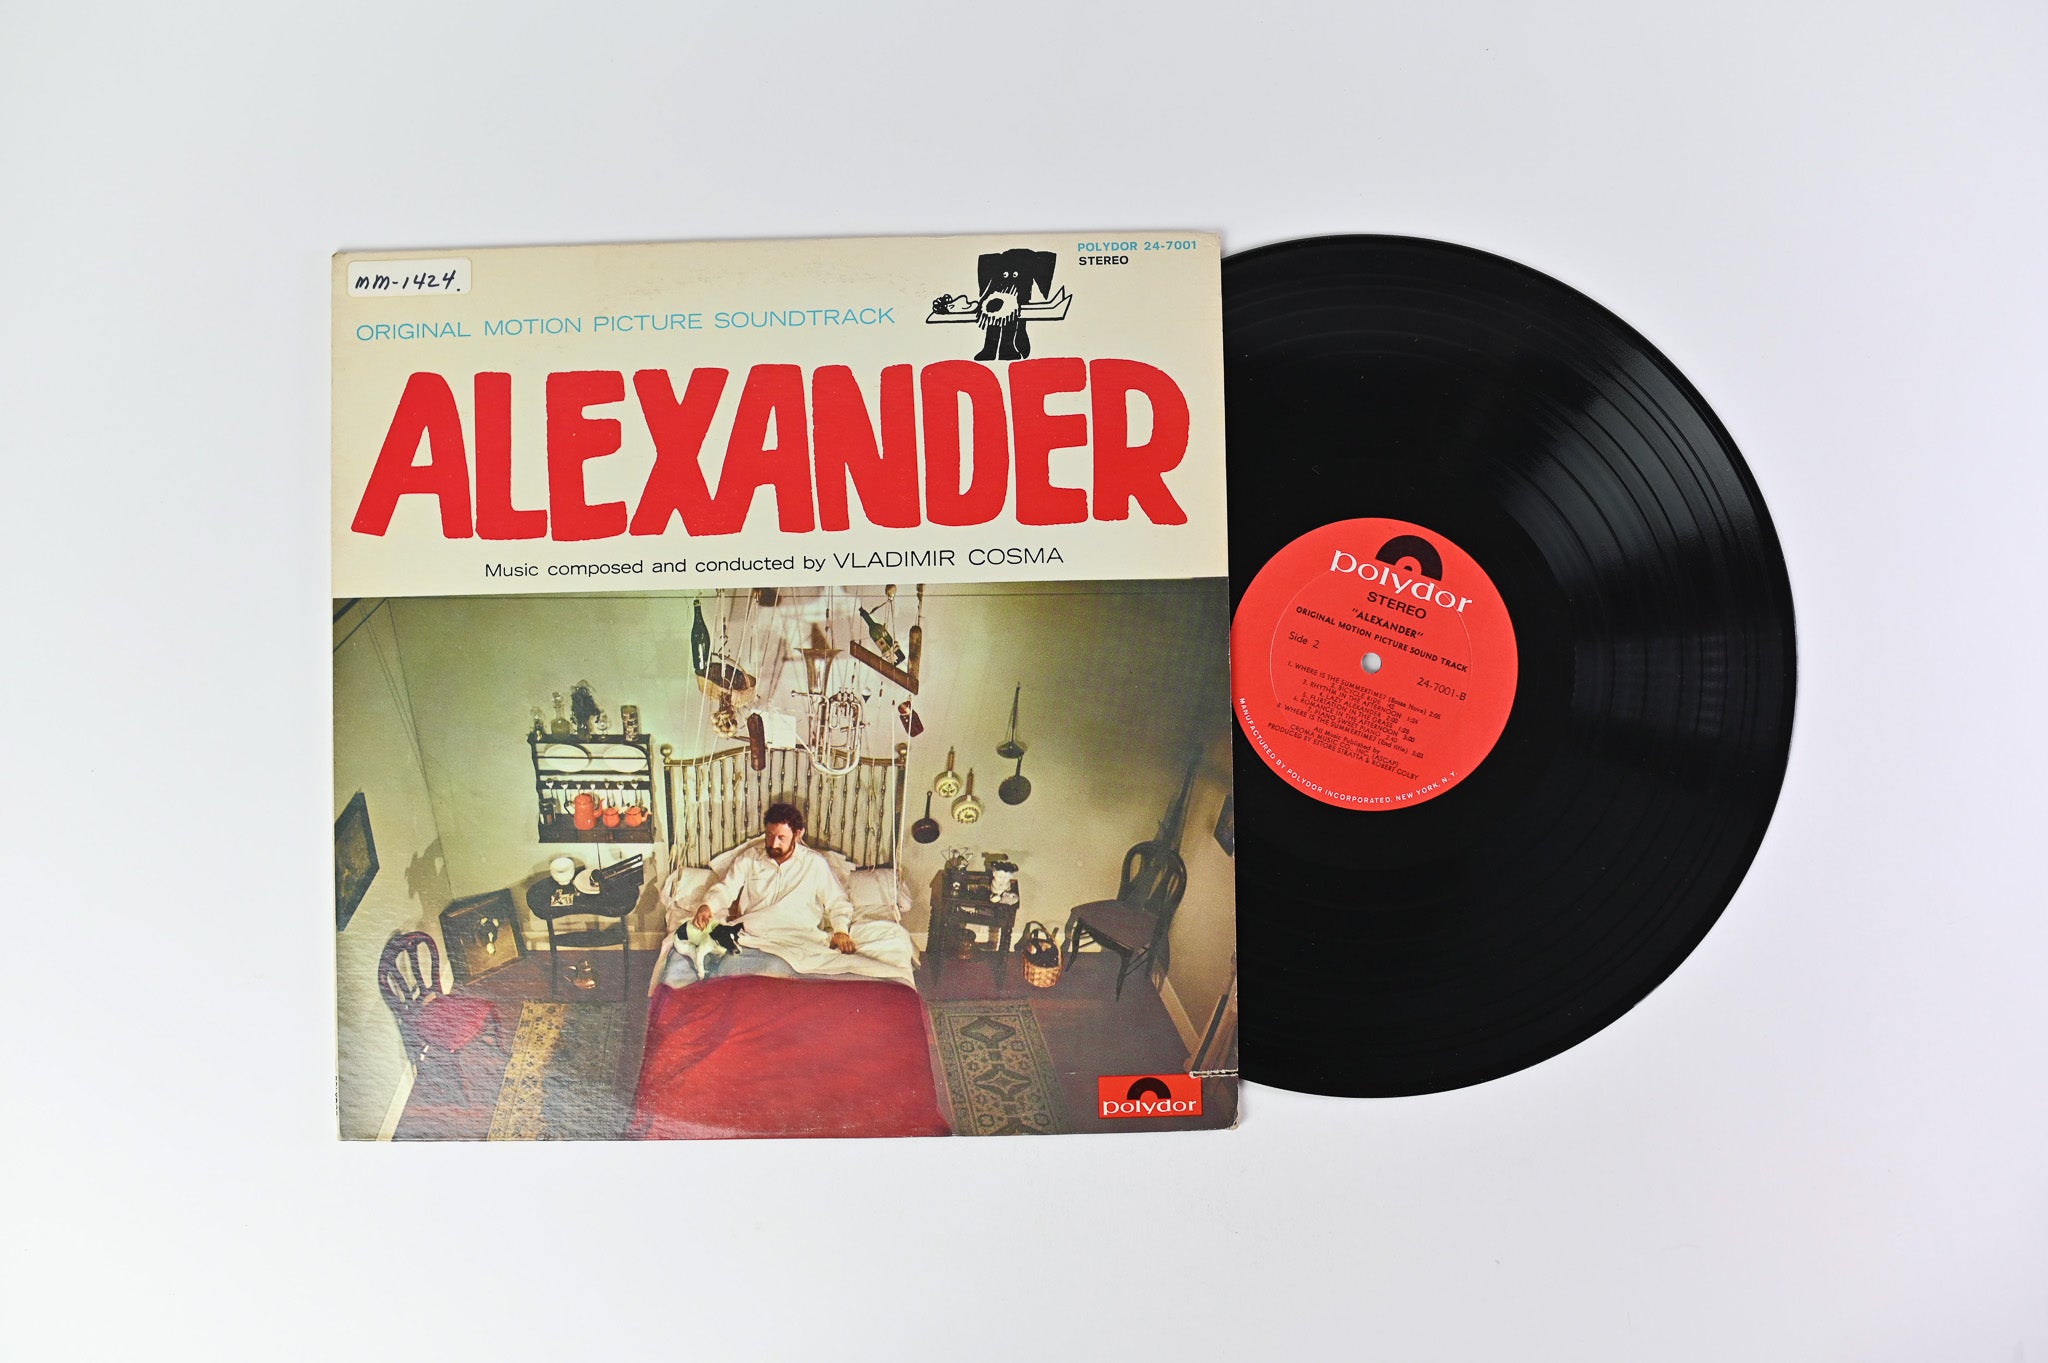 Vladimir Cosma - Alexander (Original Motion Picture Soundtrack) on Polydor